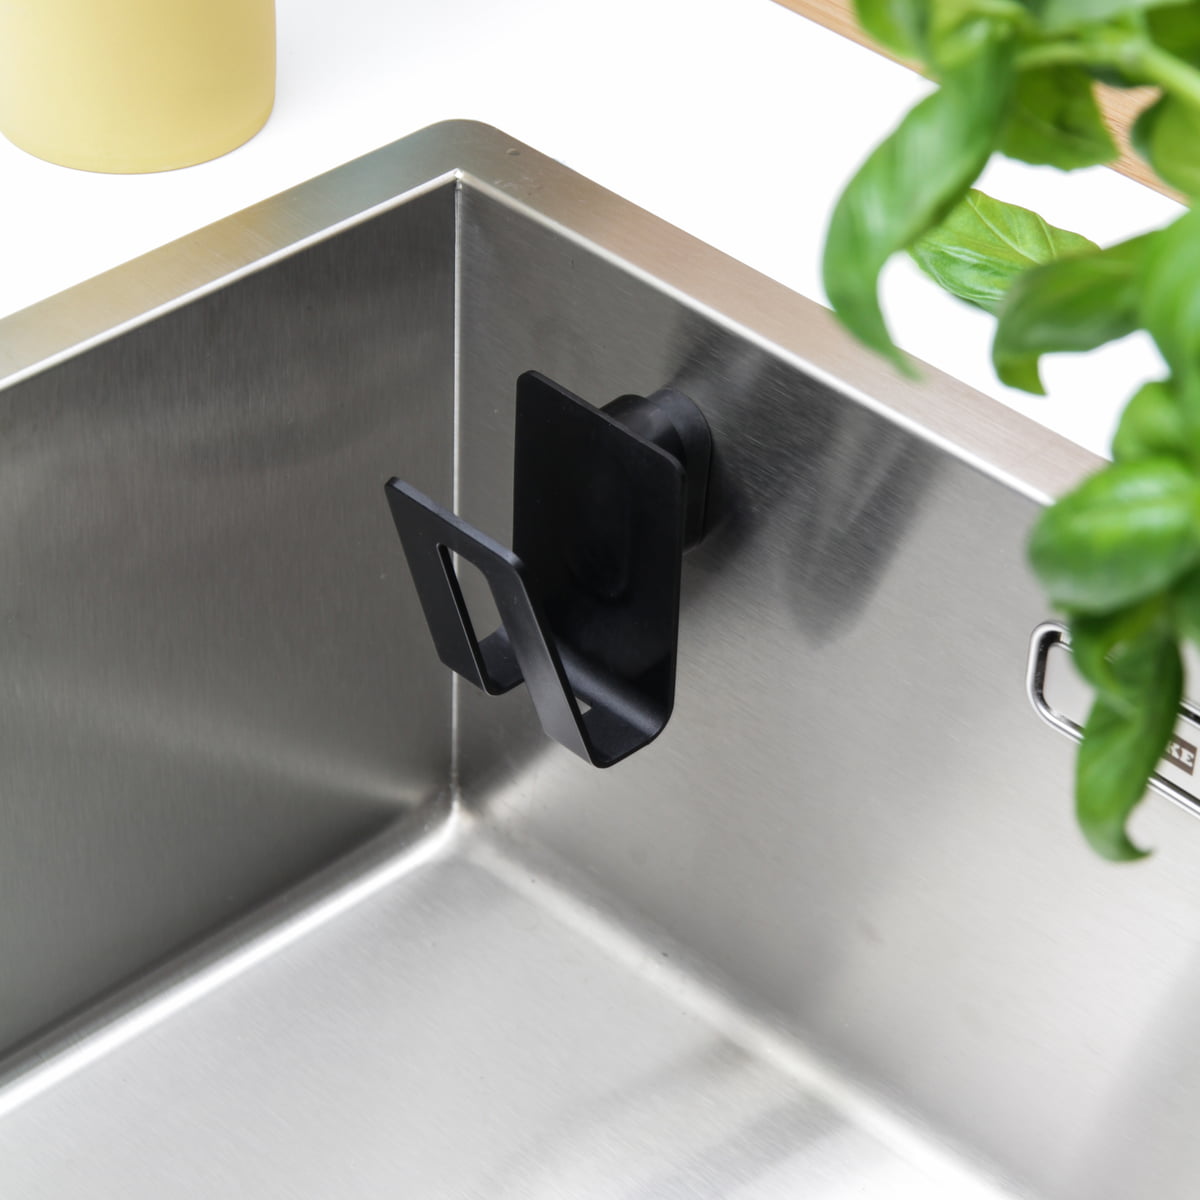 Happy Sinks Magnetic Sponge Holder for Sinks, Black or Stainless Steel on  Food52